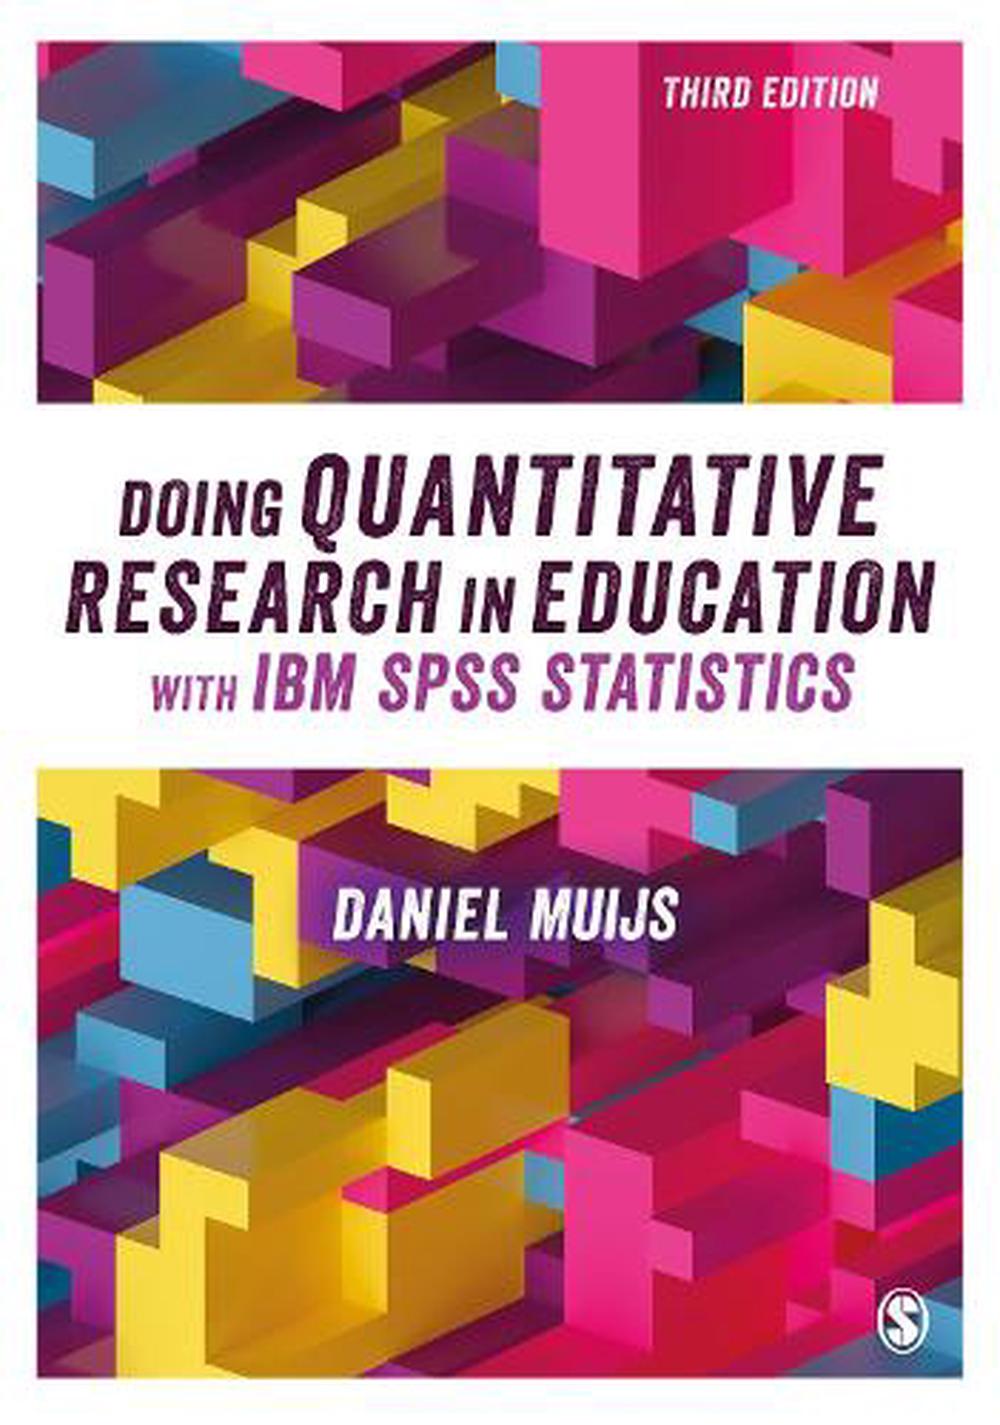 quantitative research in education